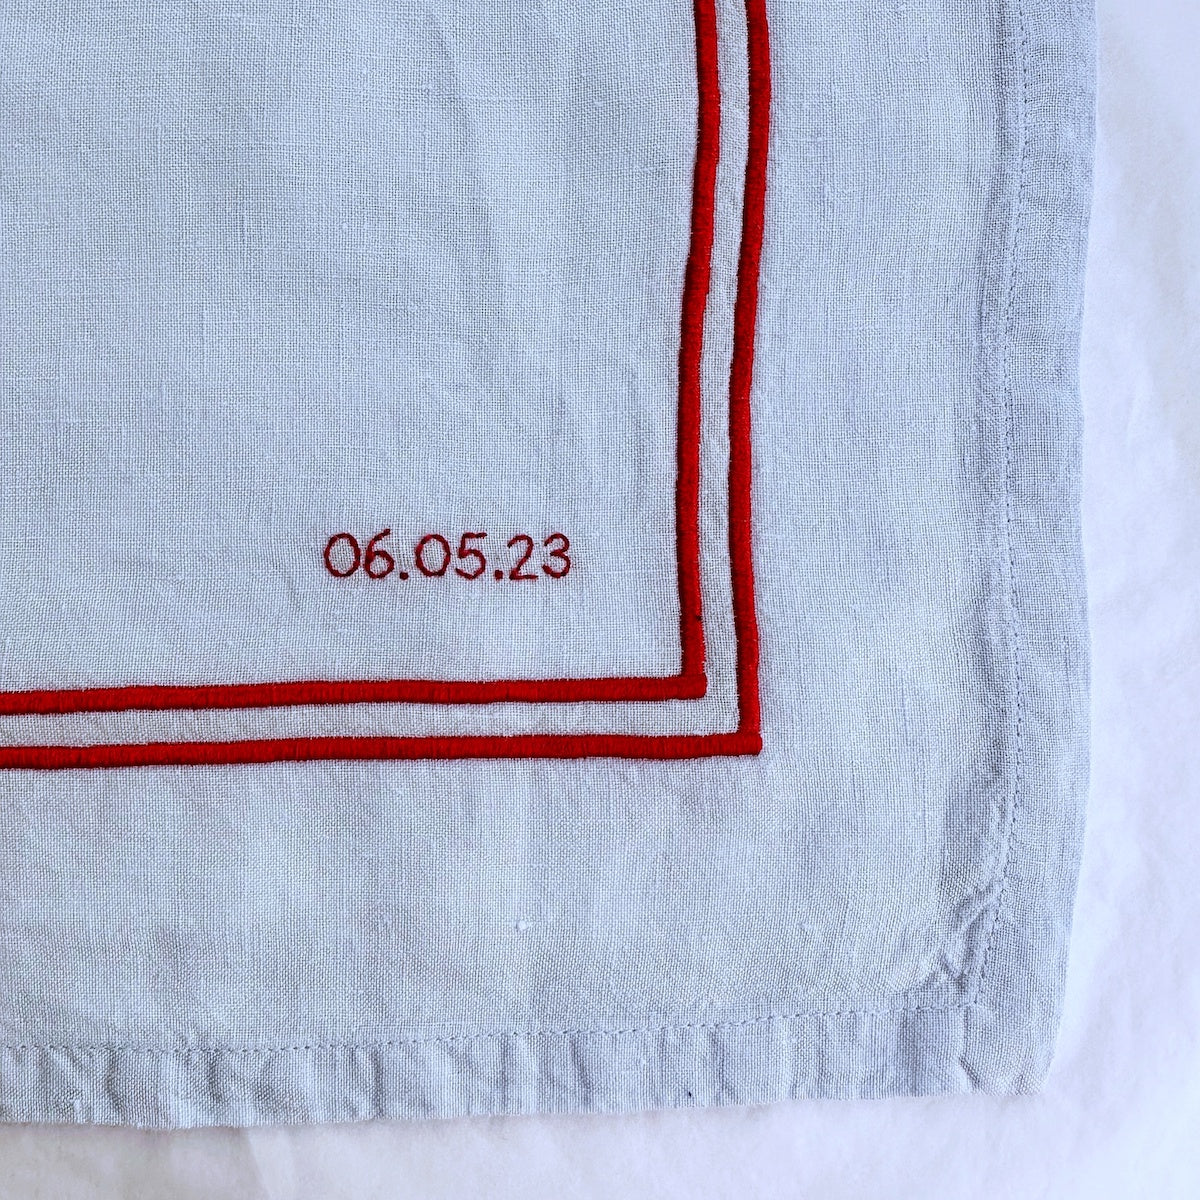 Issy Granger x Cressida Jamieson bespoke embroidered linen napkins